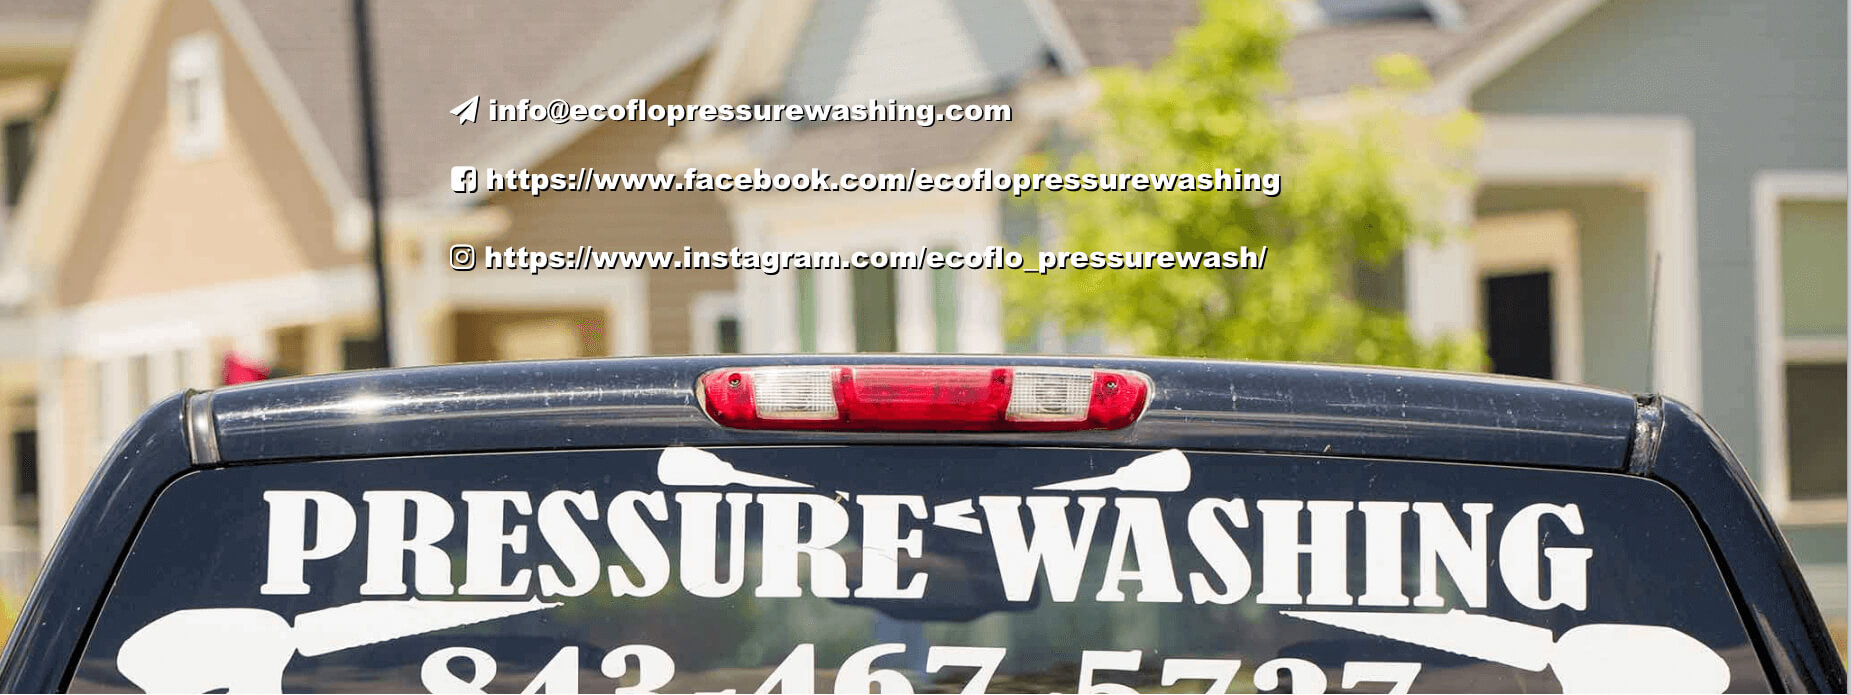 eco flo pressure washing logo design new website